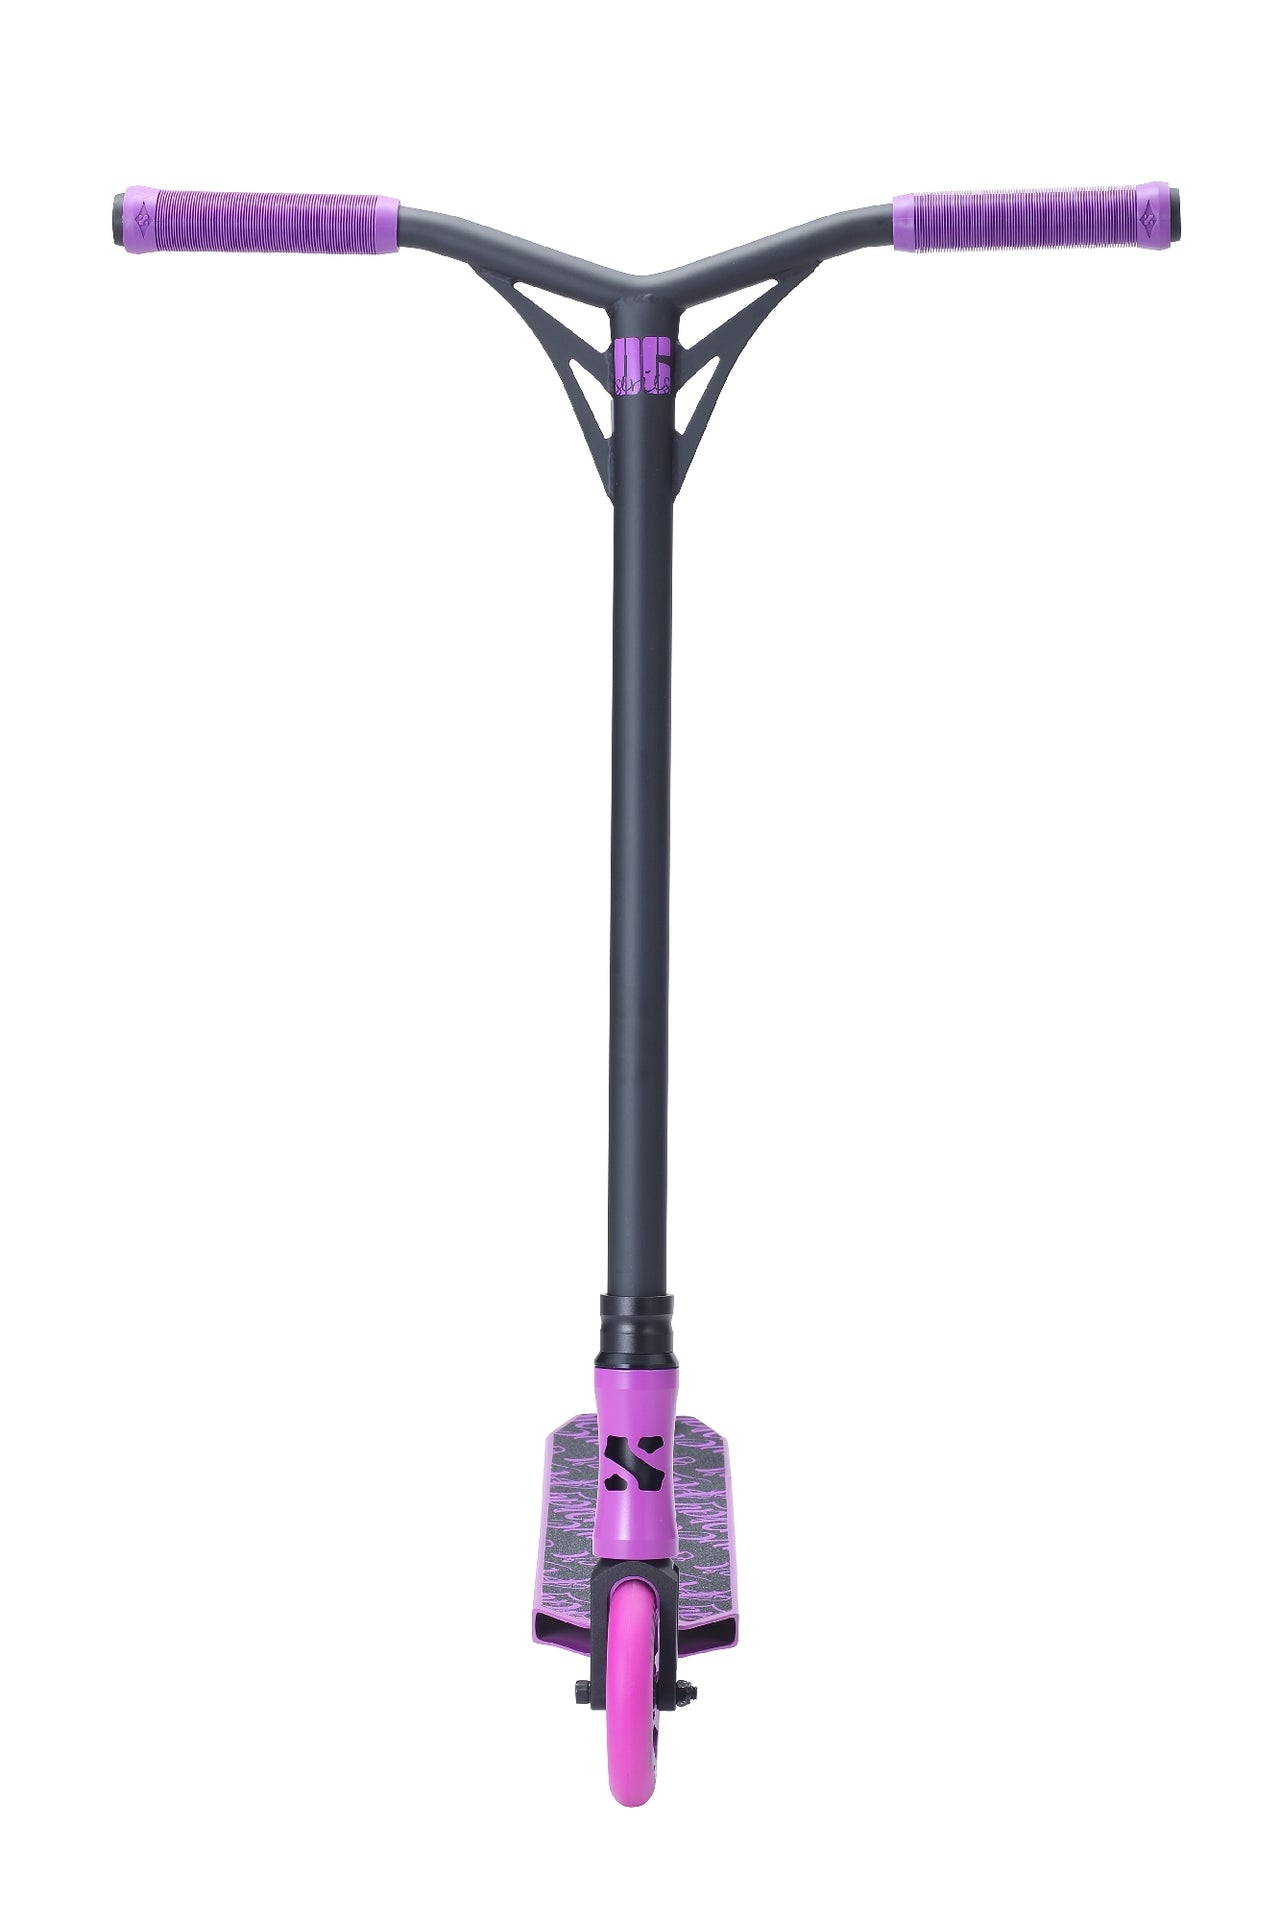 Sacrifice V2 Player Purple Scooter